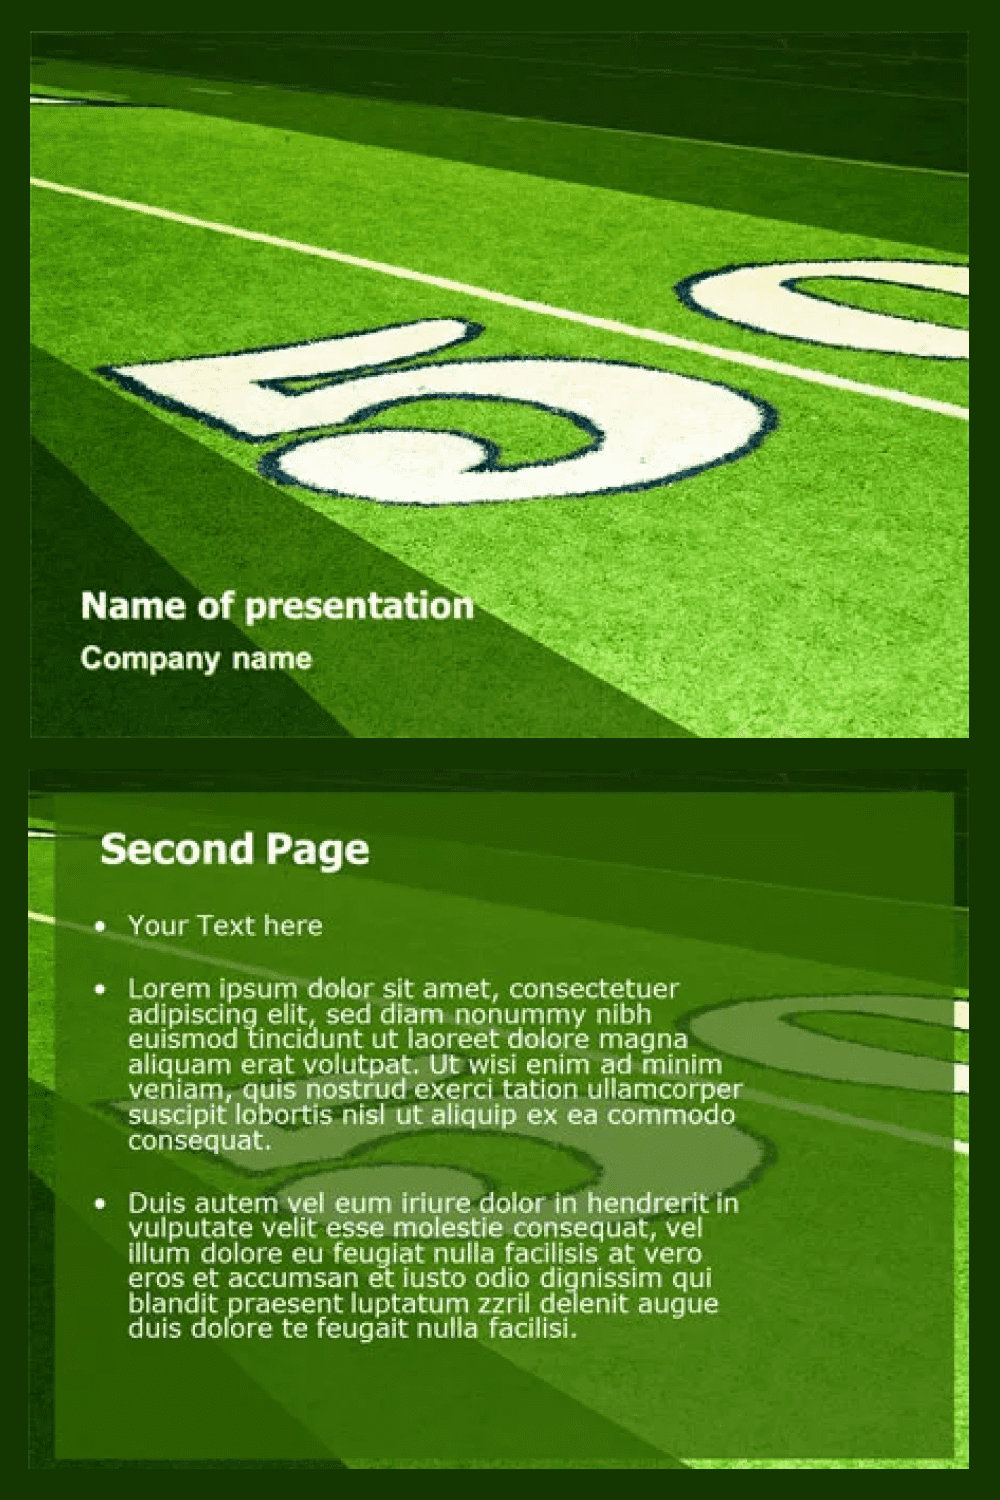 American Football field - free powerpoint template.